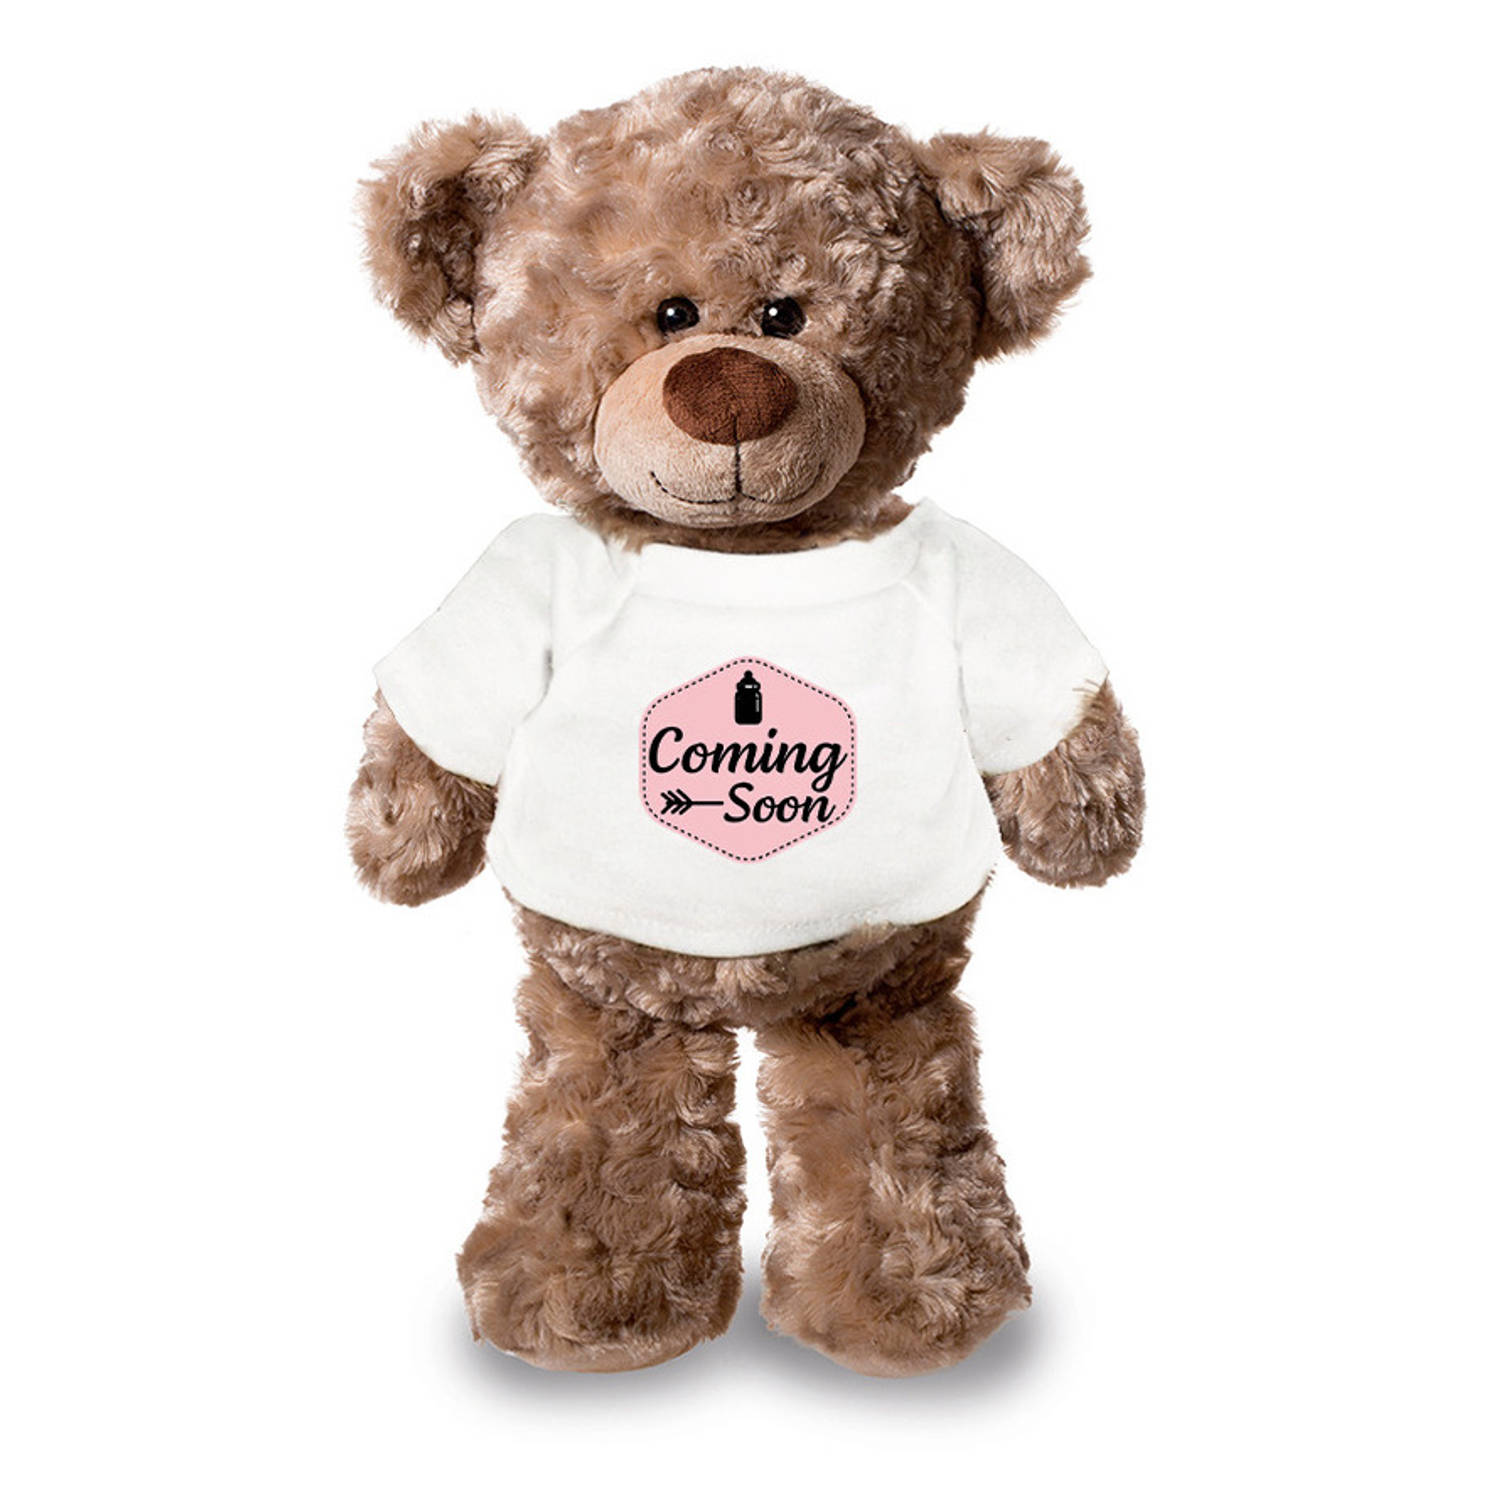 Coming soon aankondiging meisje pluche teddybeer knuffel 24 cm Knuffelberen